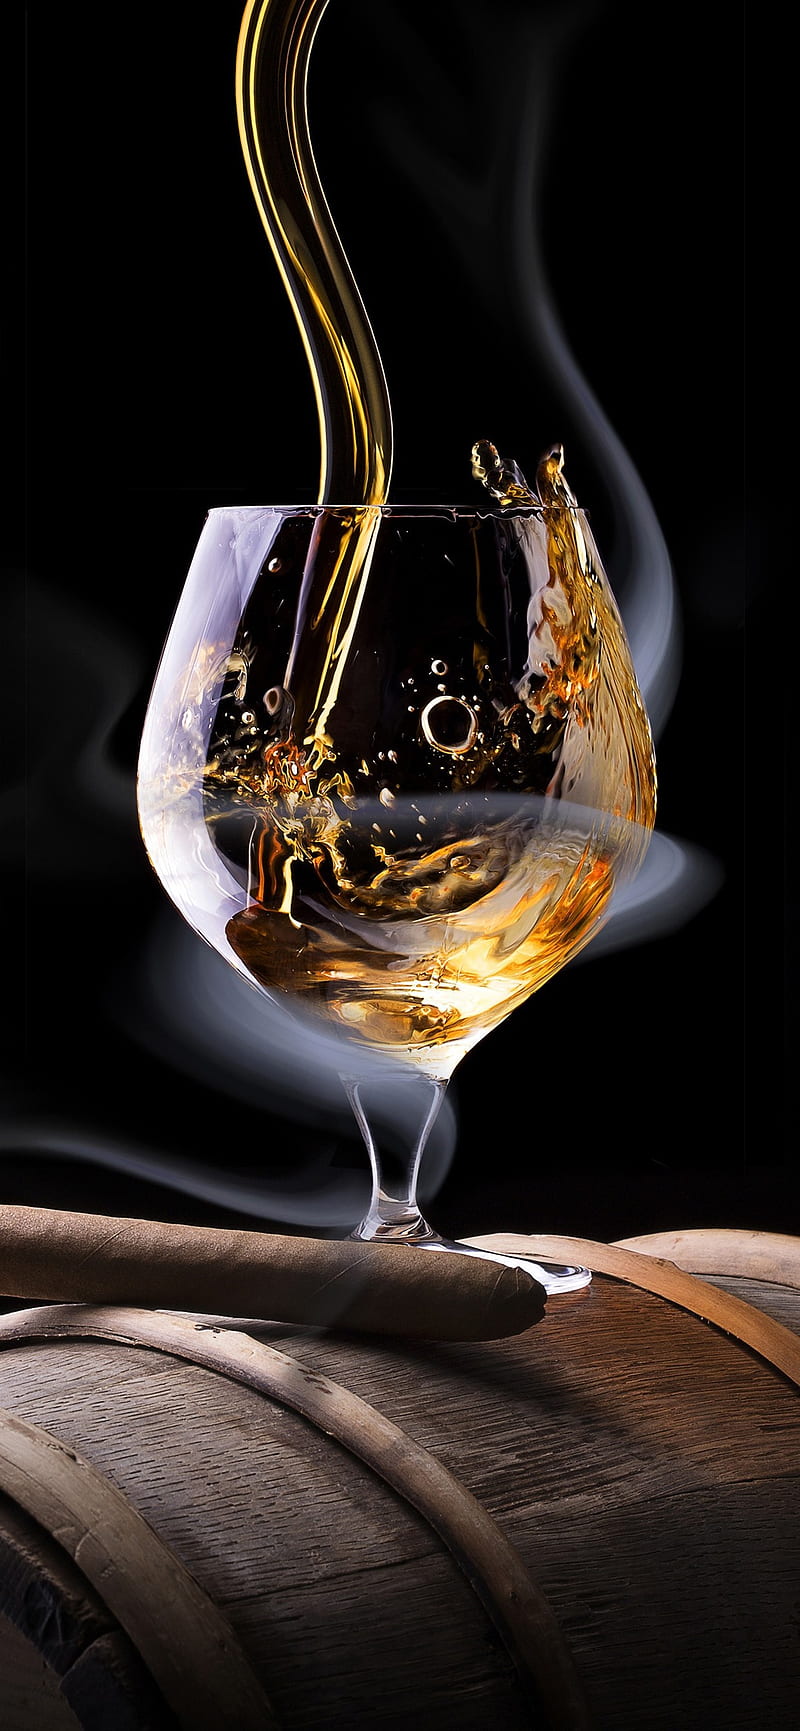 20+ Free Cognac+Brandy & Brandy Images - Pixabay